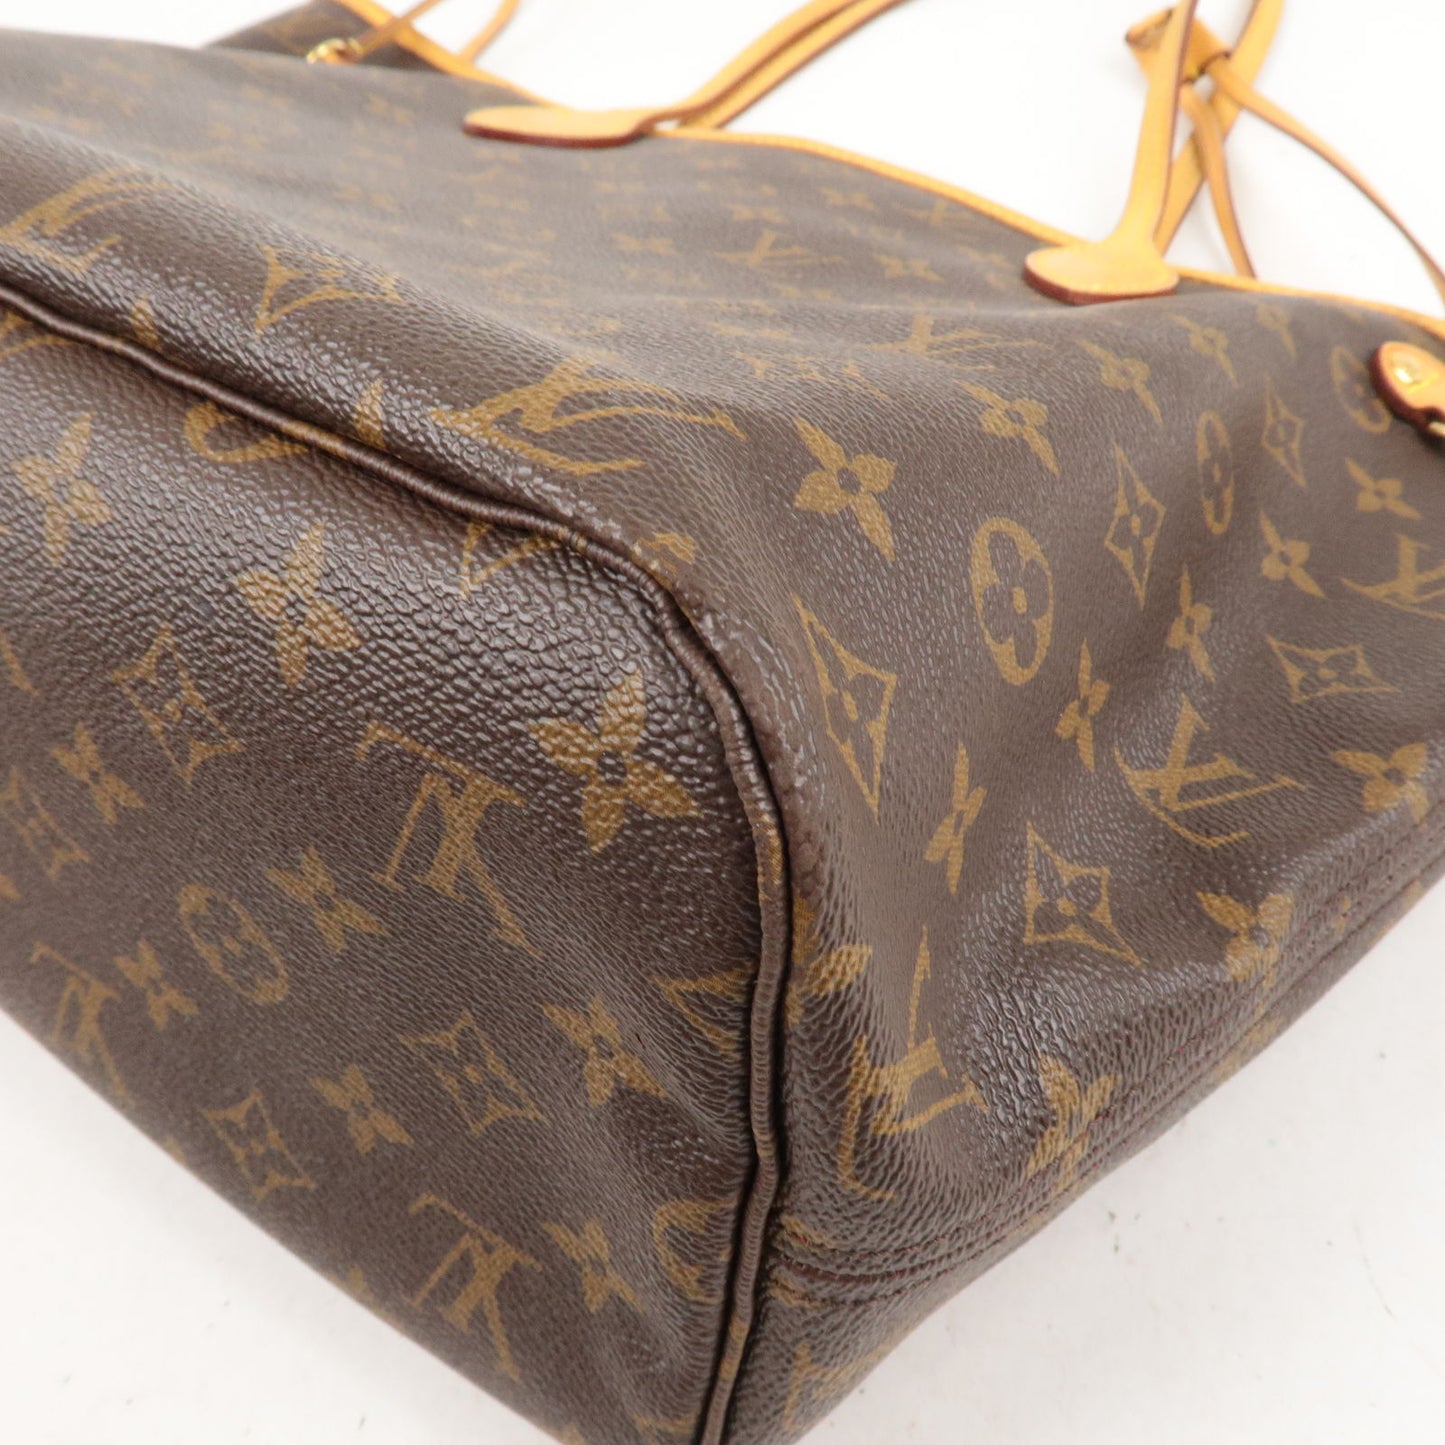 Louis Vuitton Monogram Neverfull MM Tote Bag Fuchsia M40996